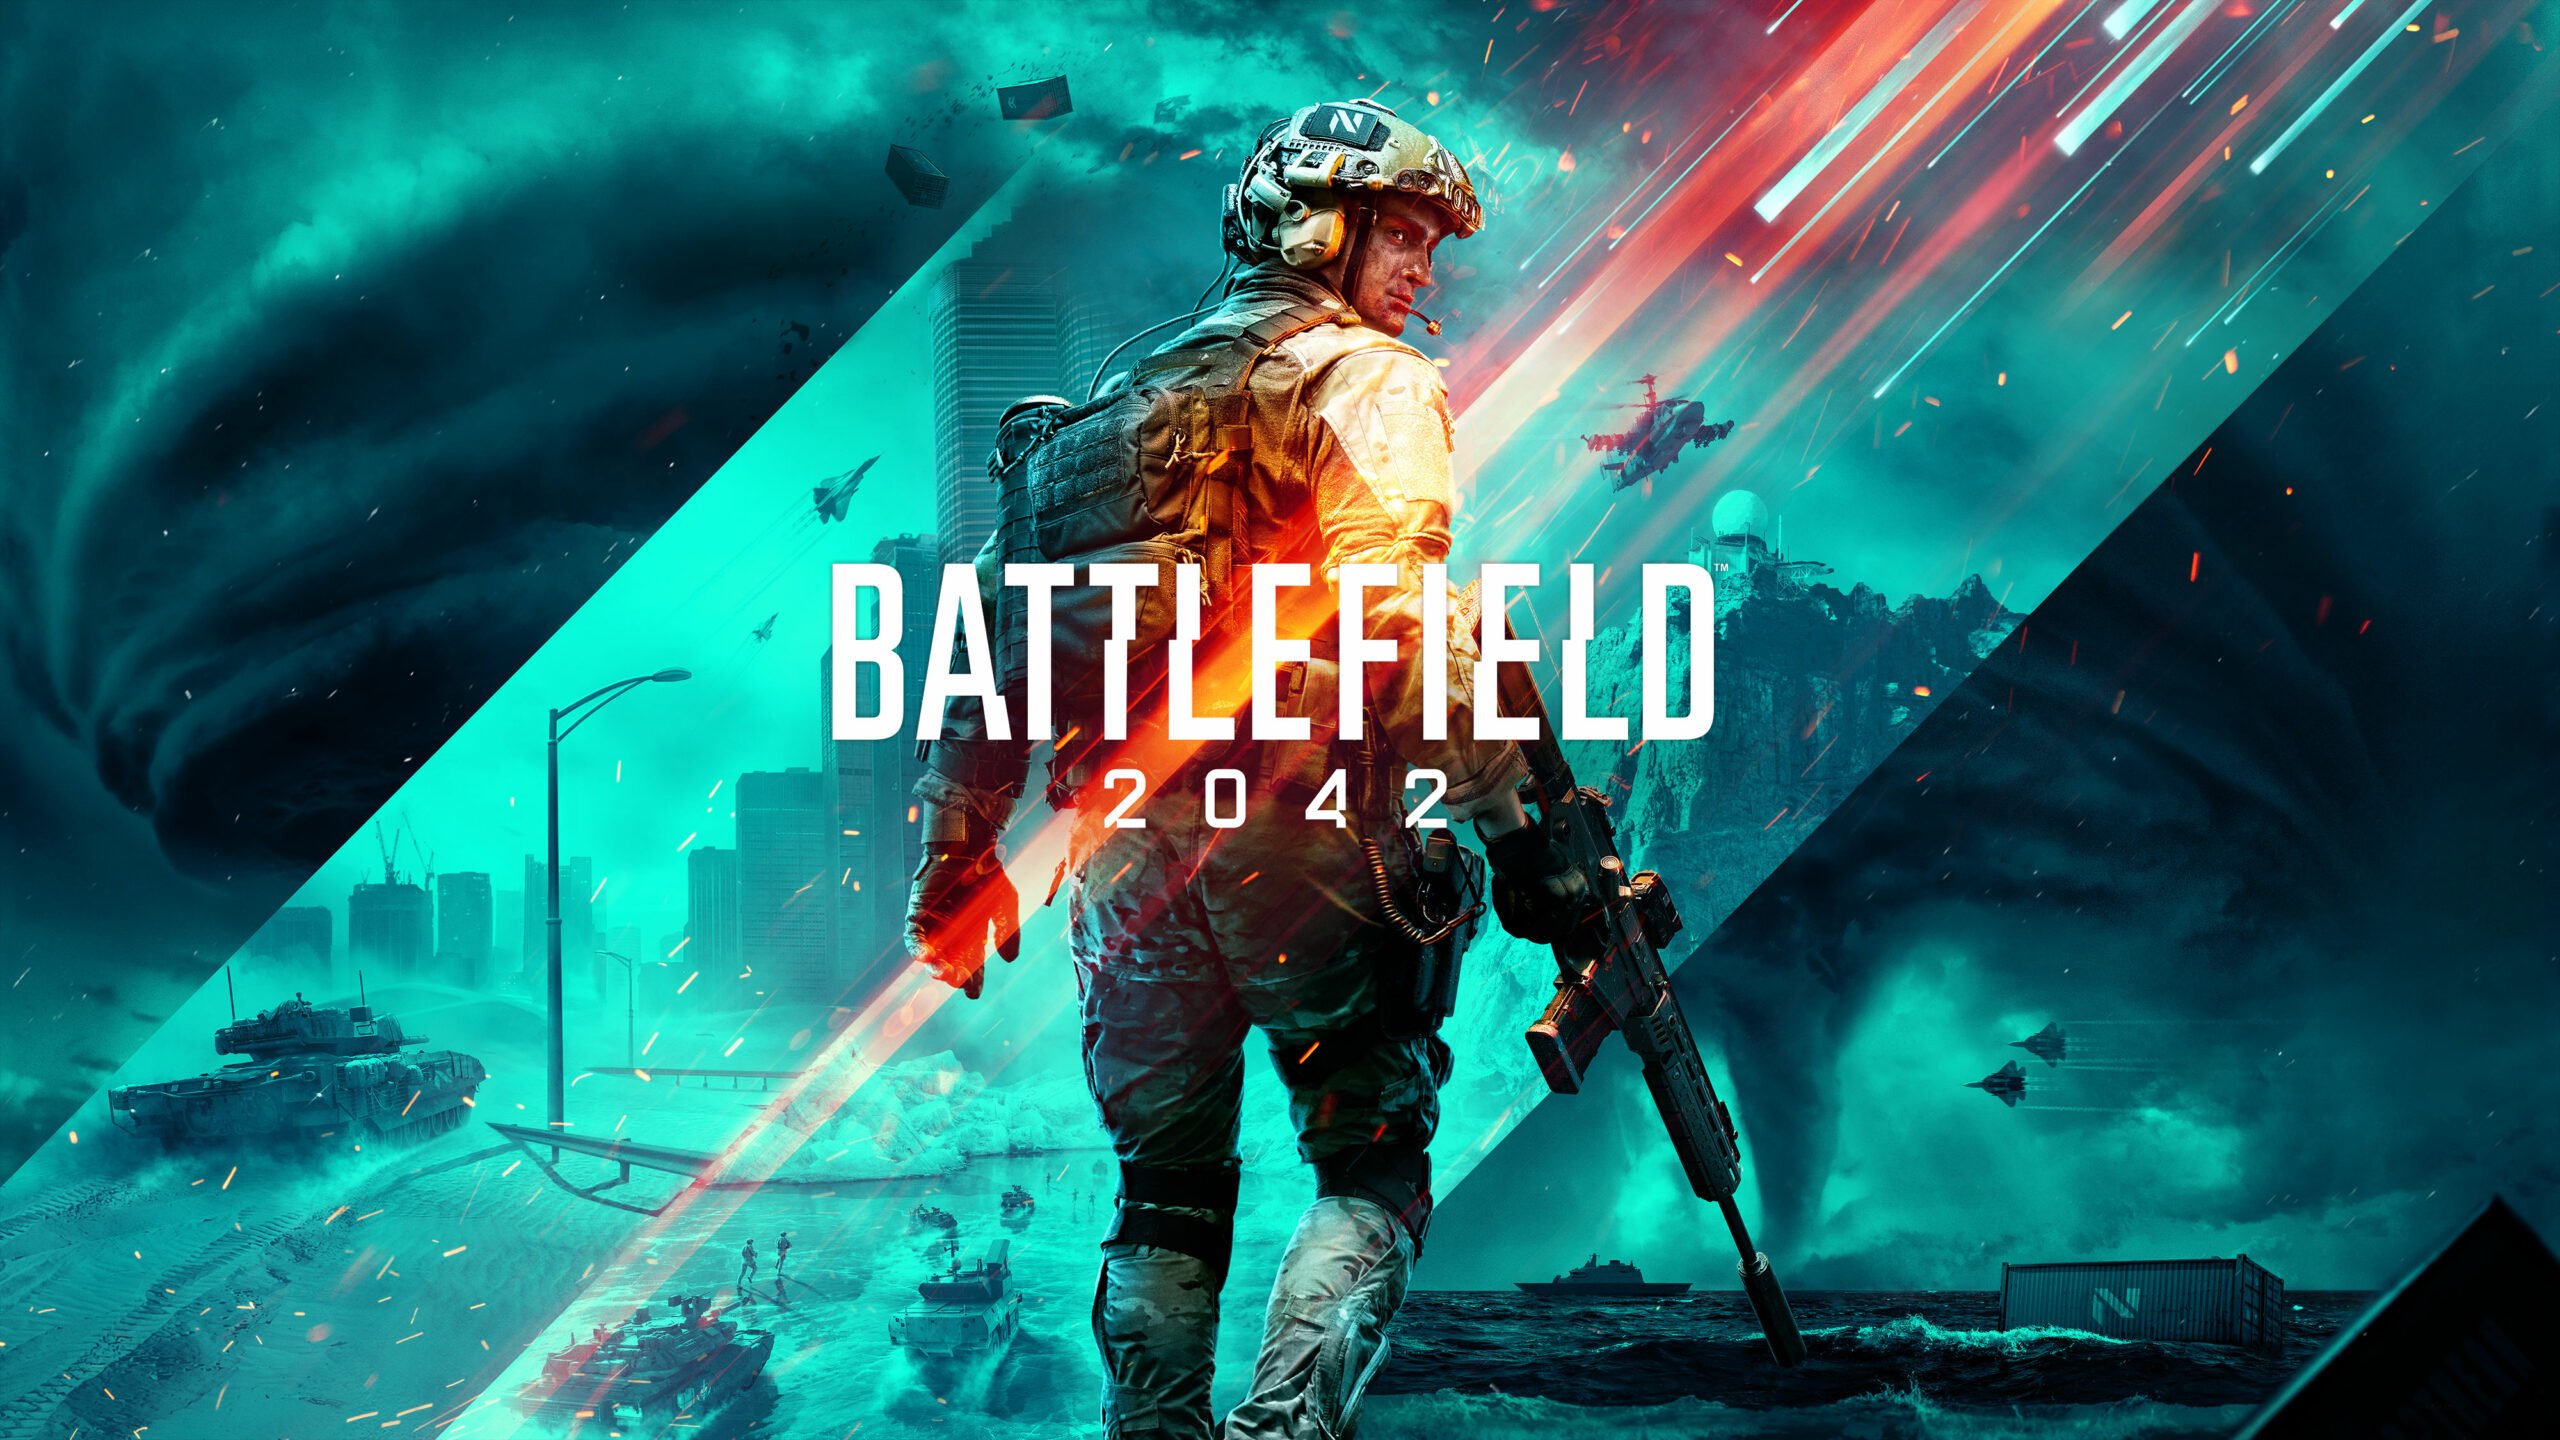 Battlefield 2042 releases on October 22nd, first official screenshots &  details